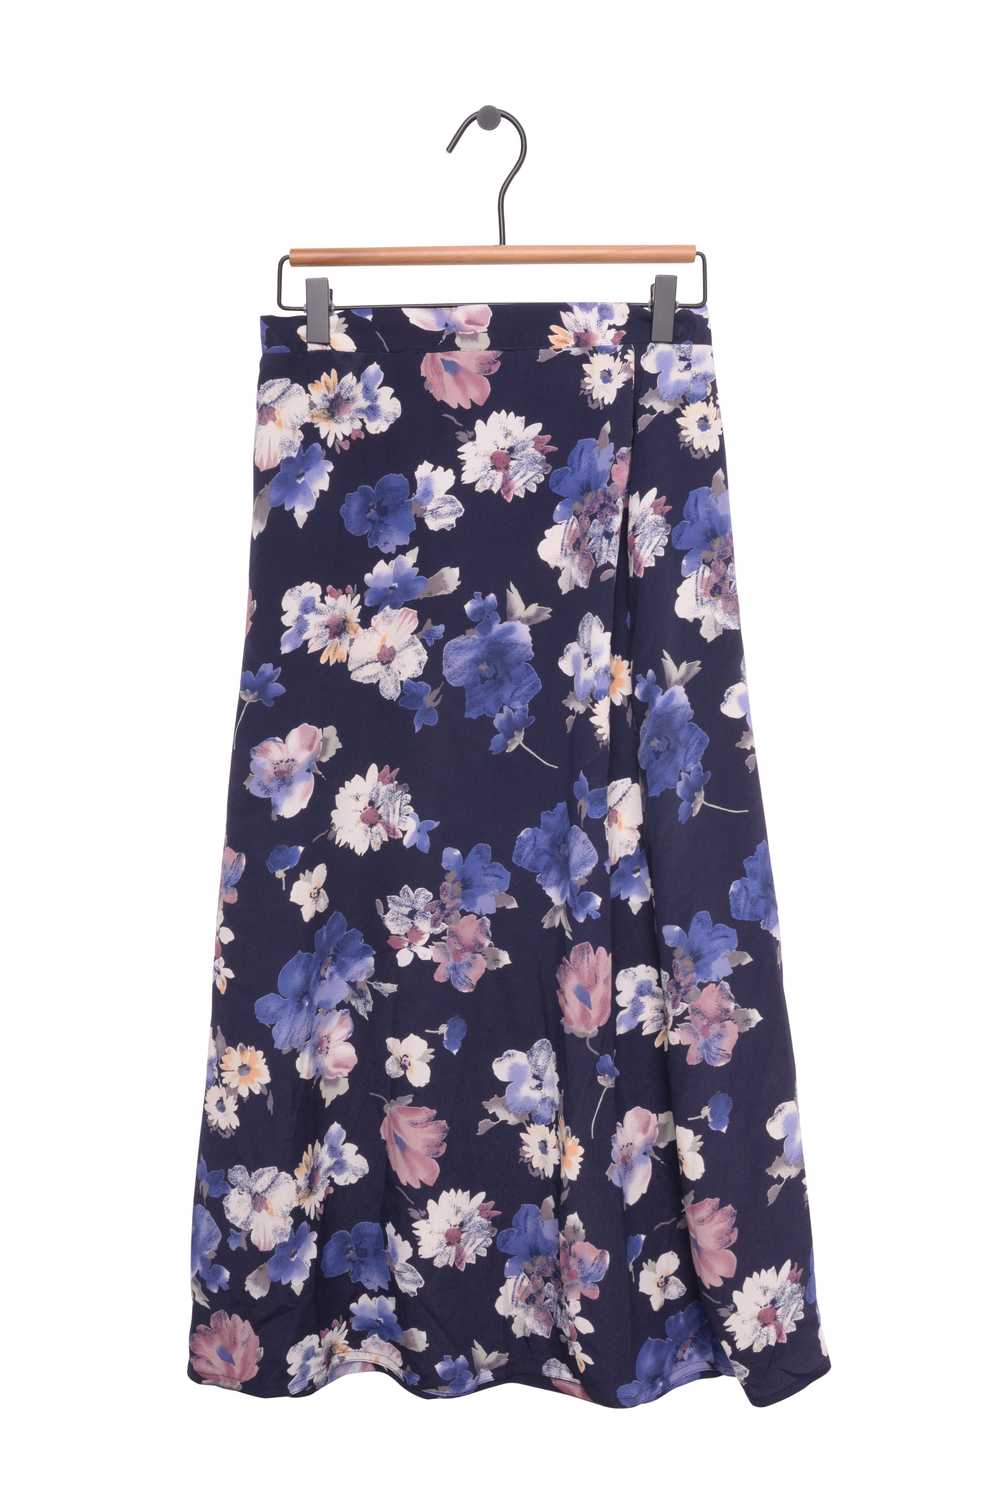 Floral Midi Skirt - image 1